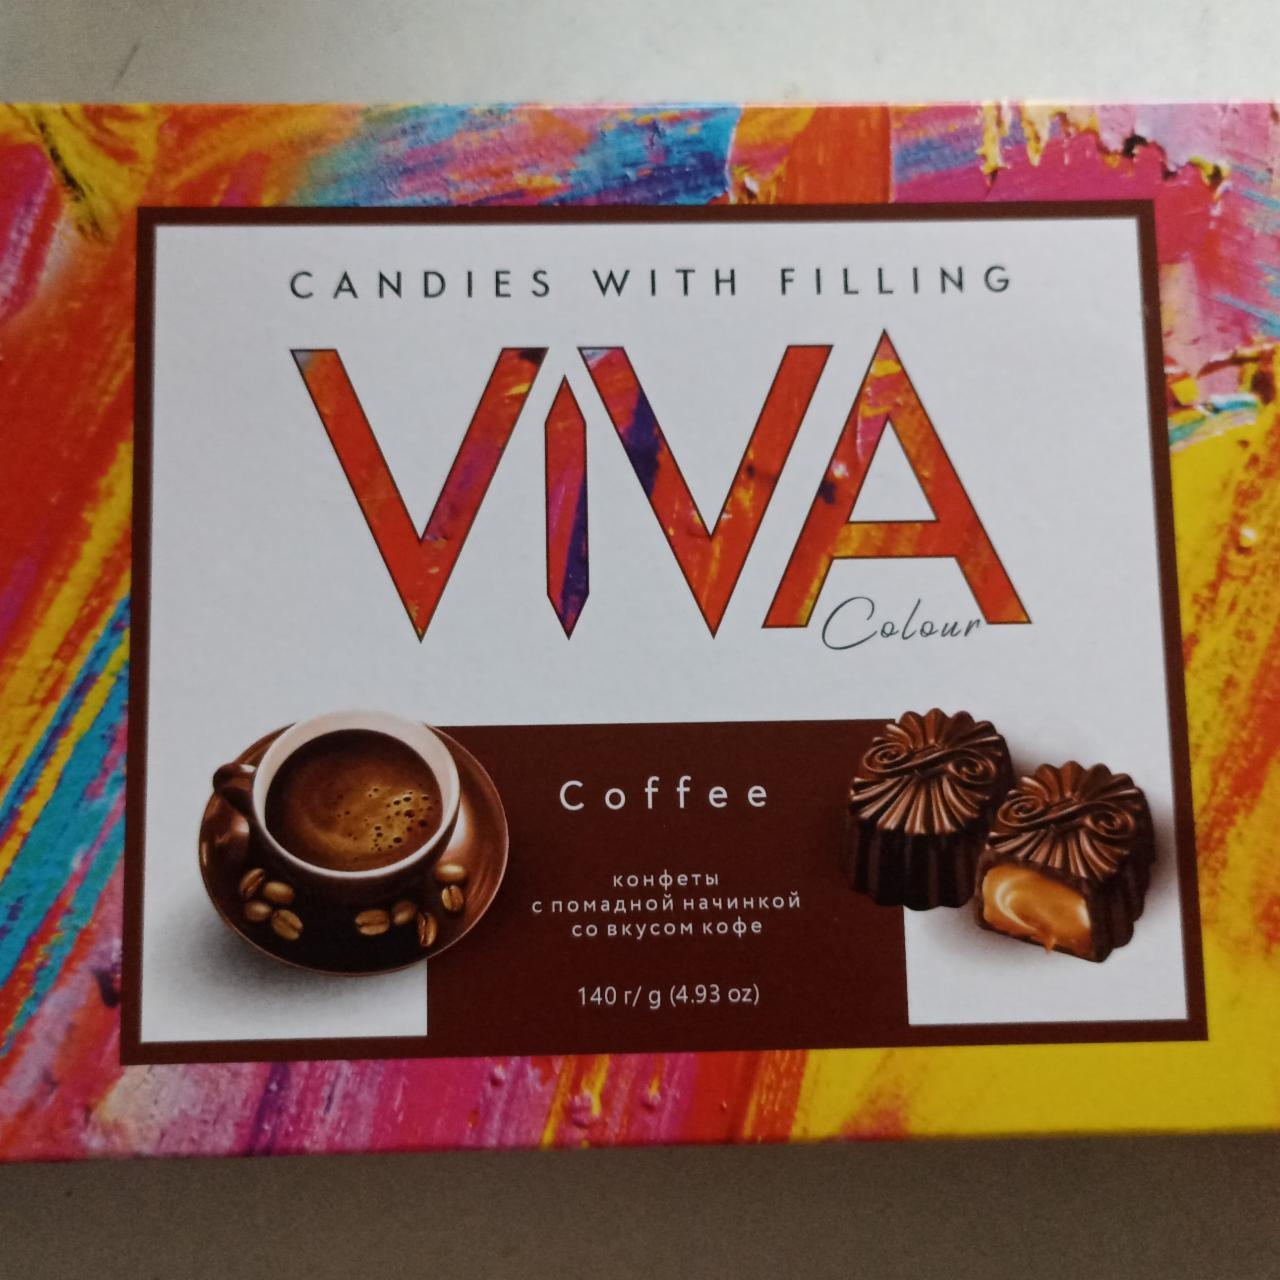 Фото - Конфеты Flavour coffee со вкусом кофе Viva Colour